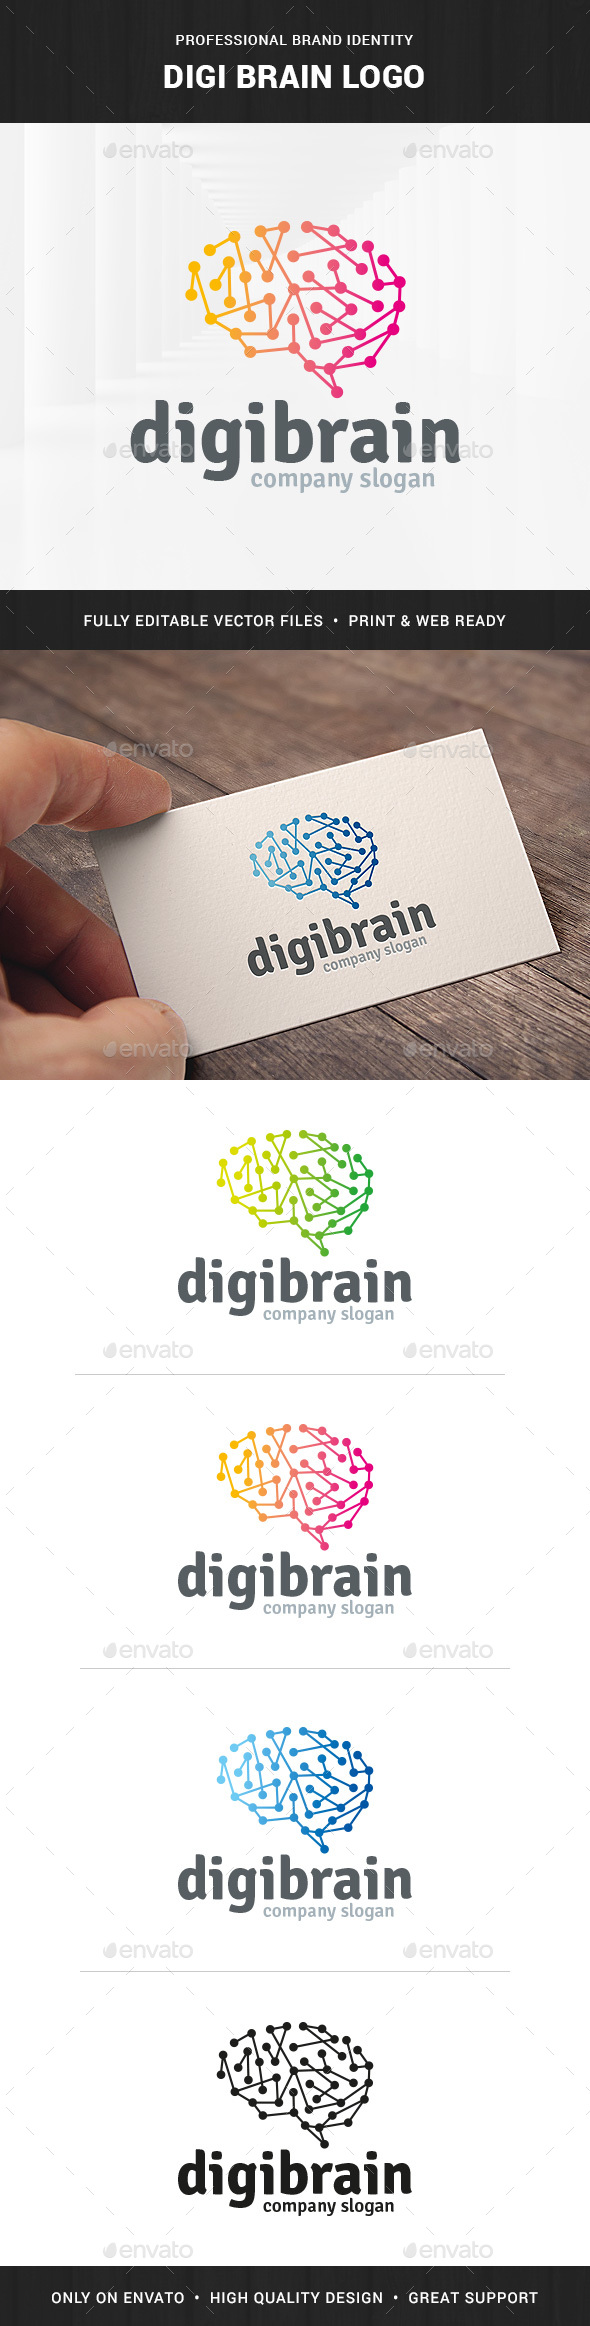 Digi Brain Logo Template